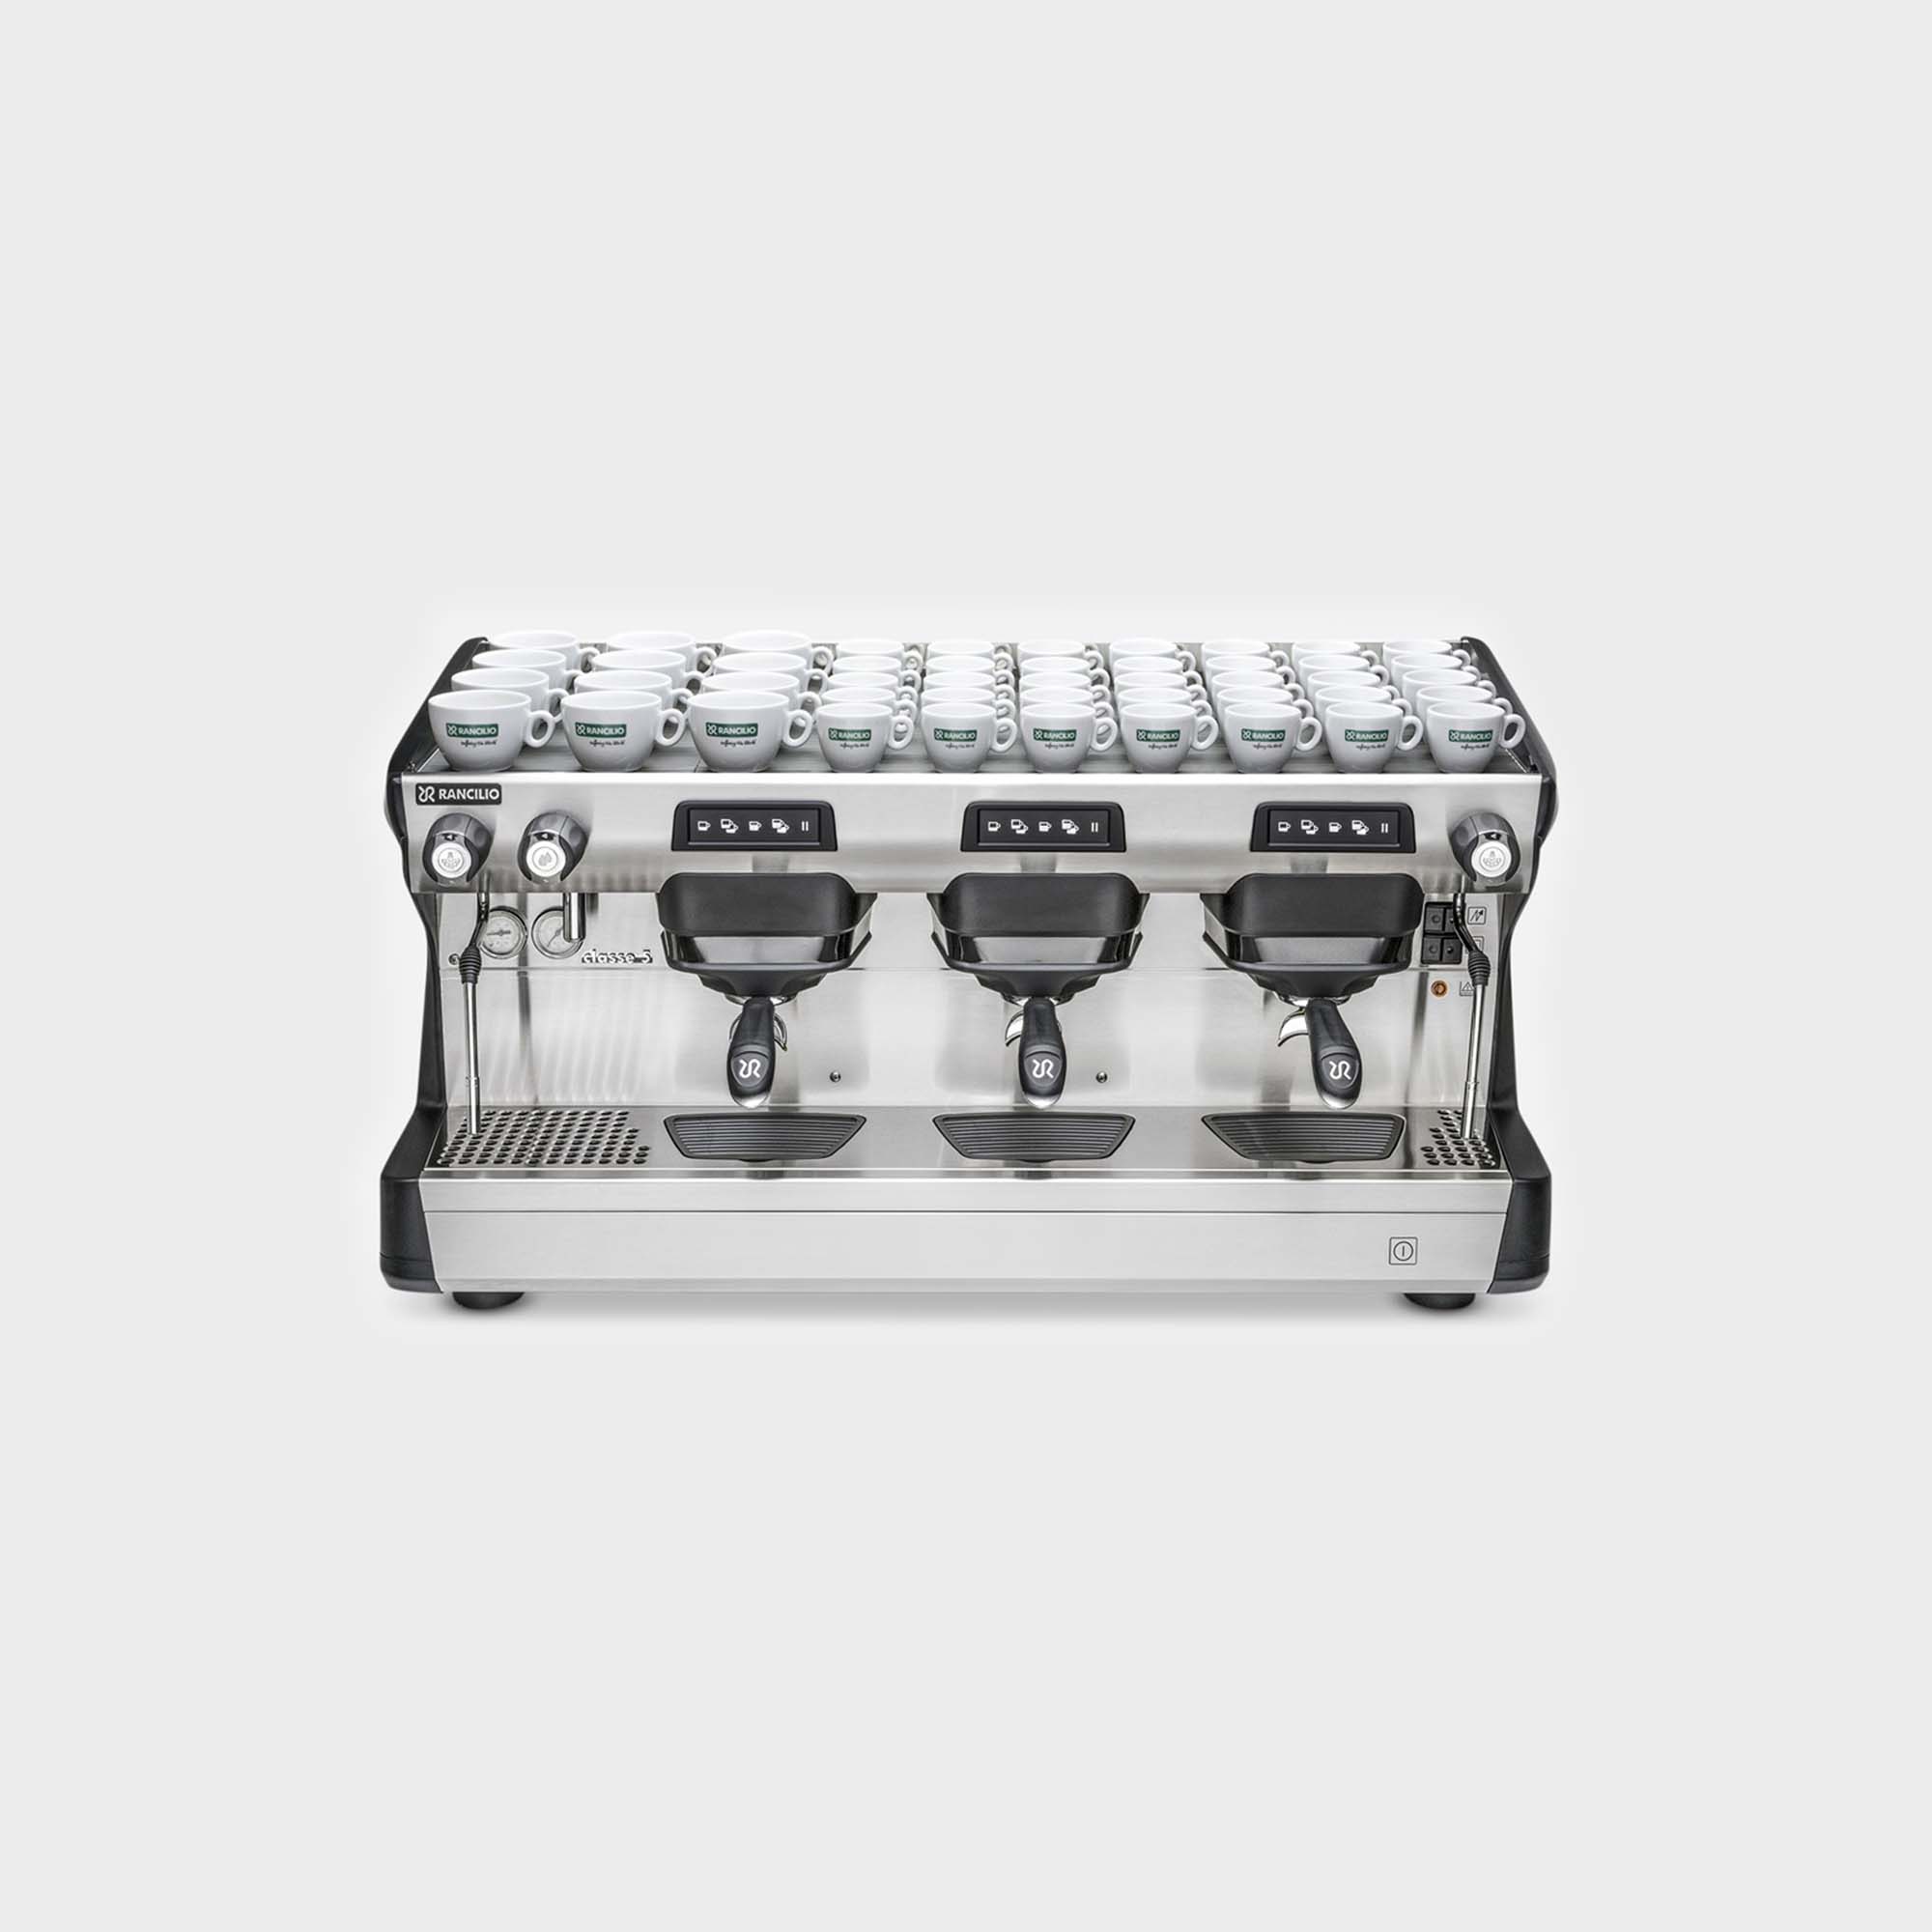 Classe 9 Usb: Traditional Espresso Machines - Rancilio